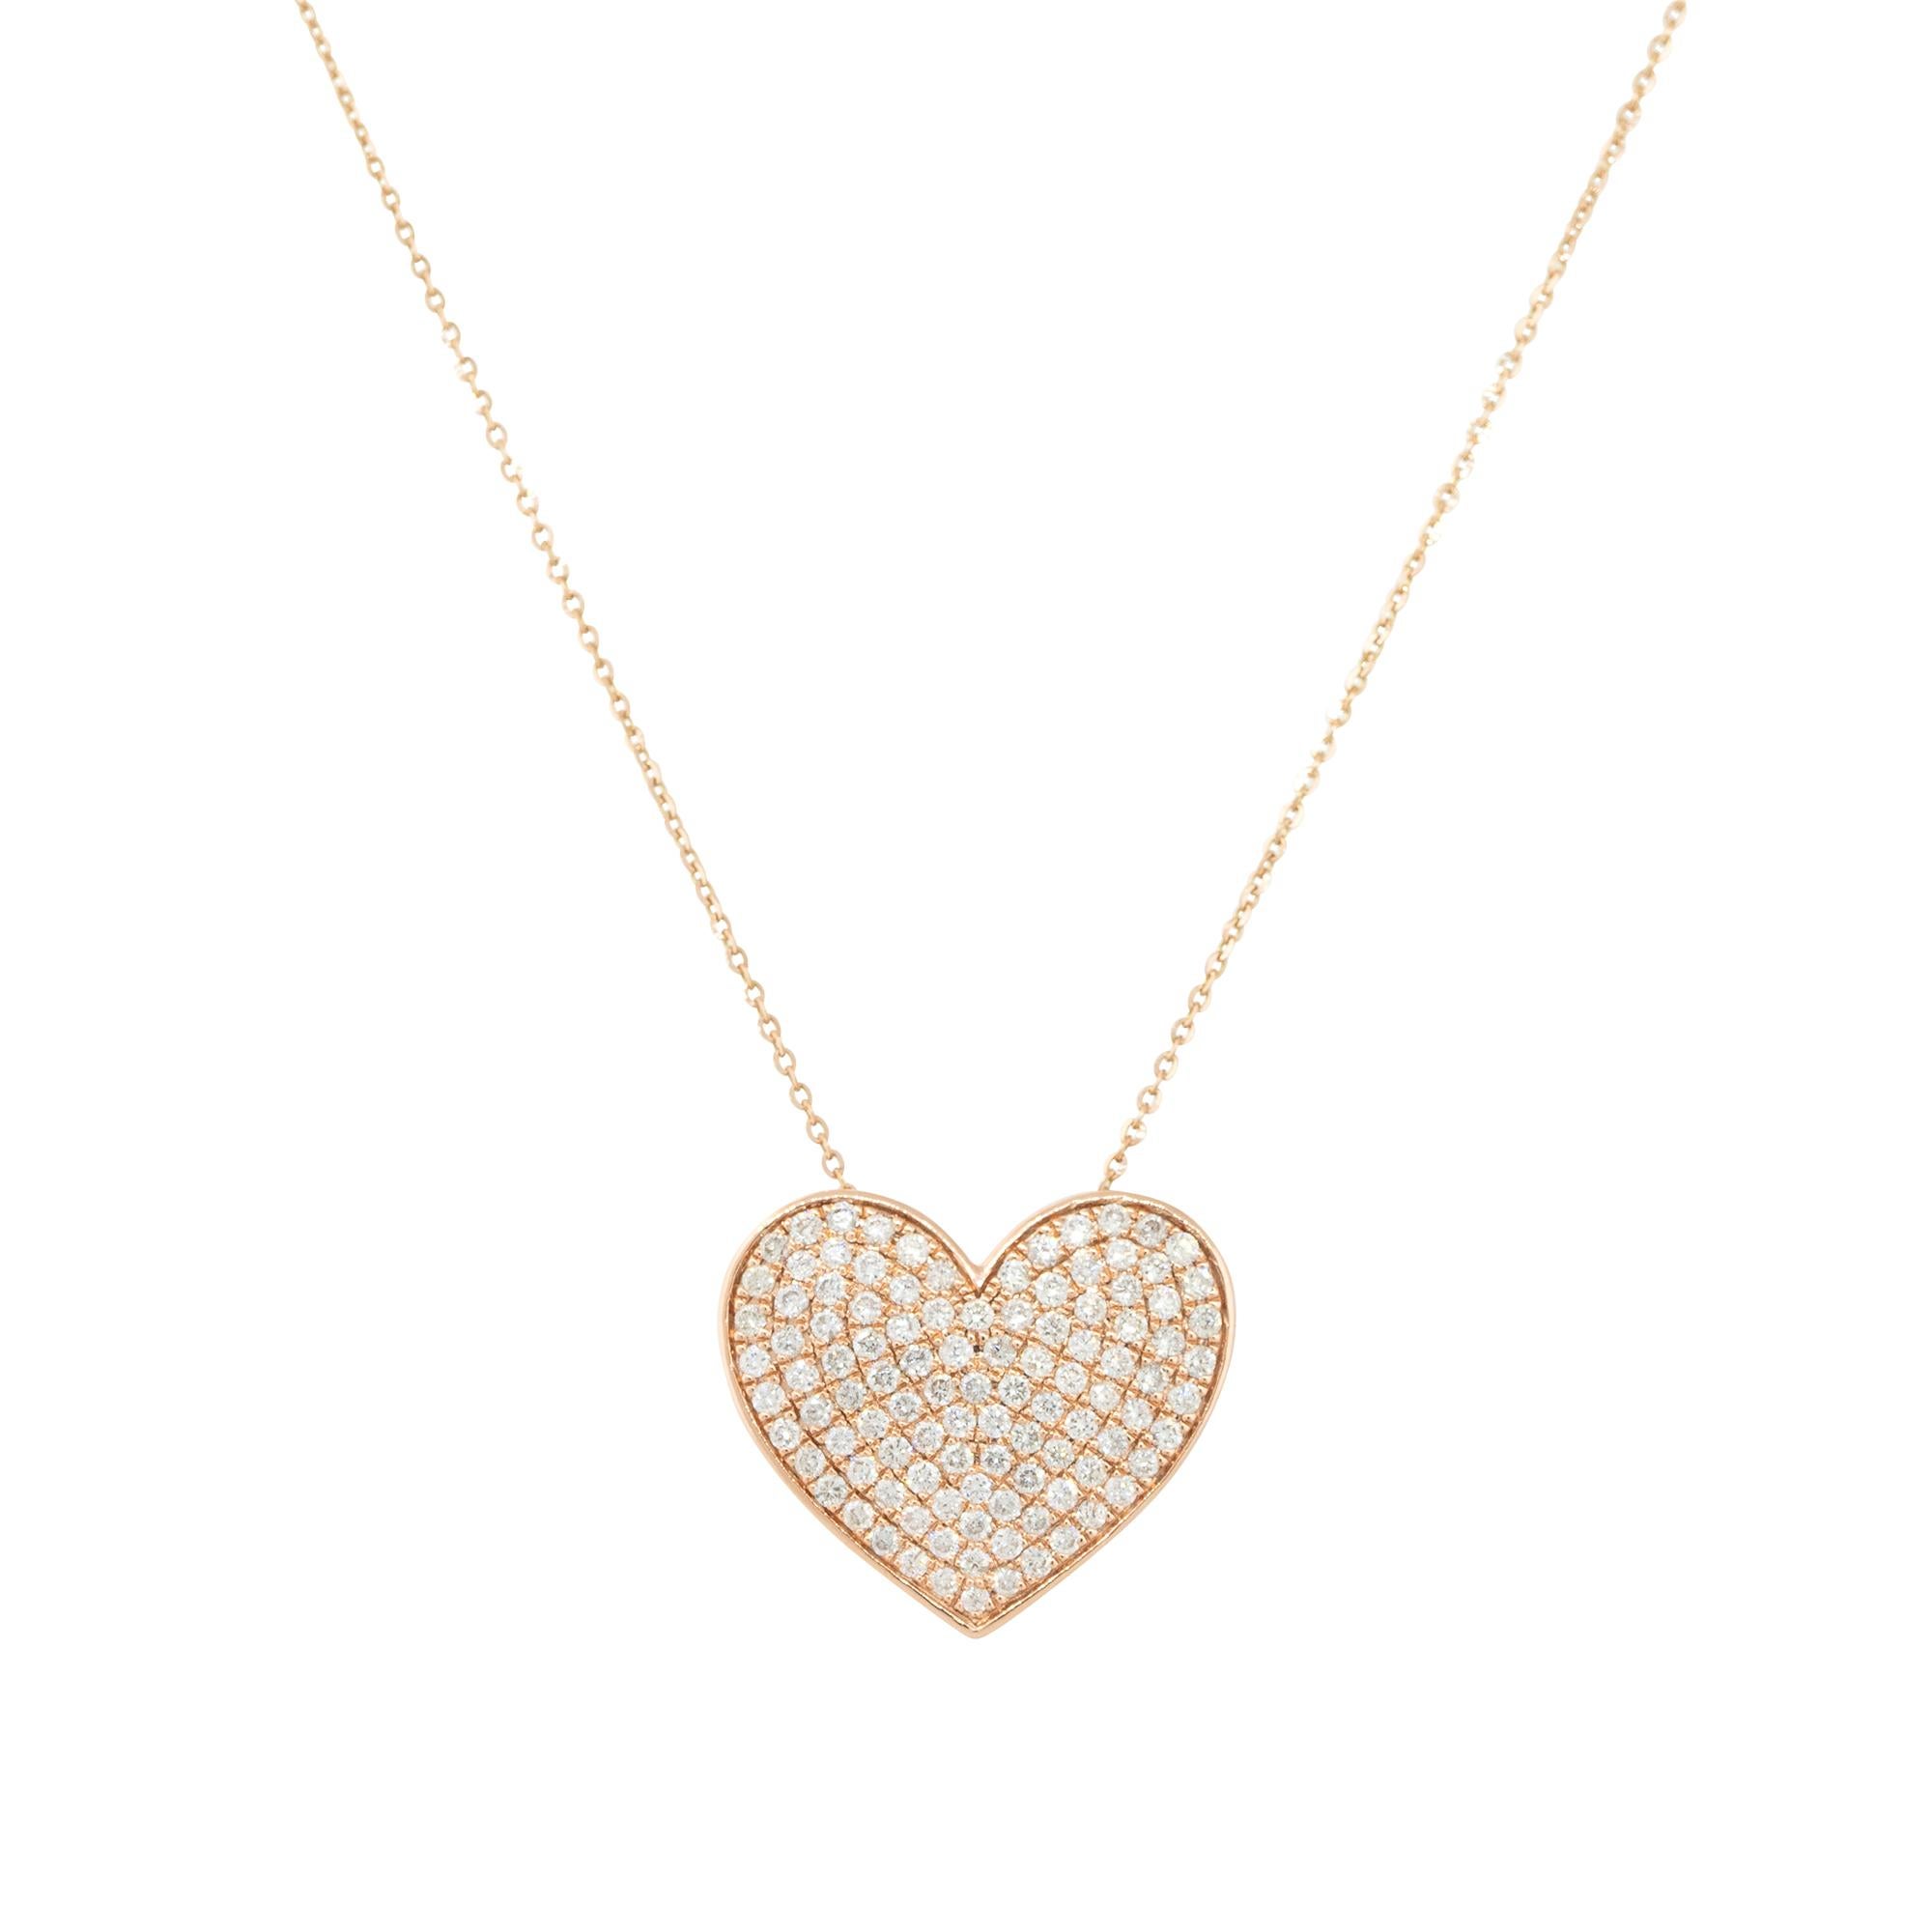 Round Cut 1.01 Carat Pave Diamond Heart Pendant Necklace 14 Karat In Stock For Sale